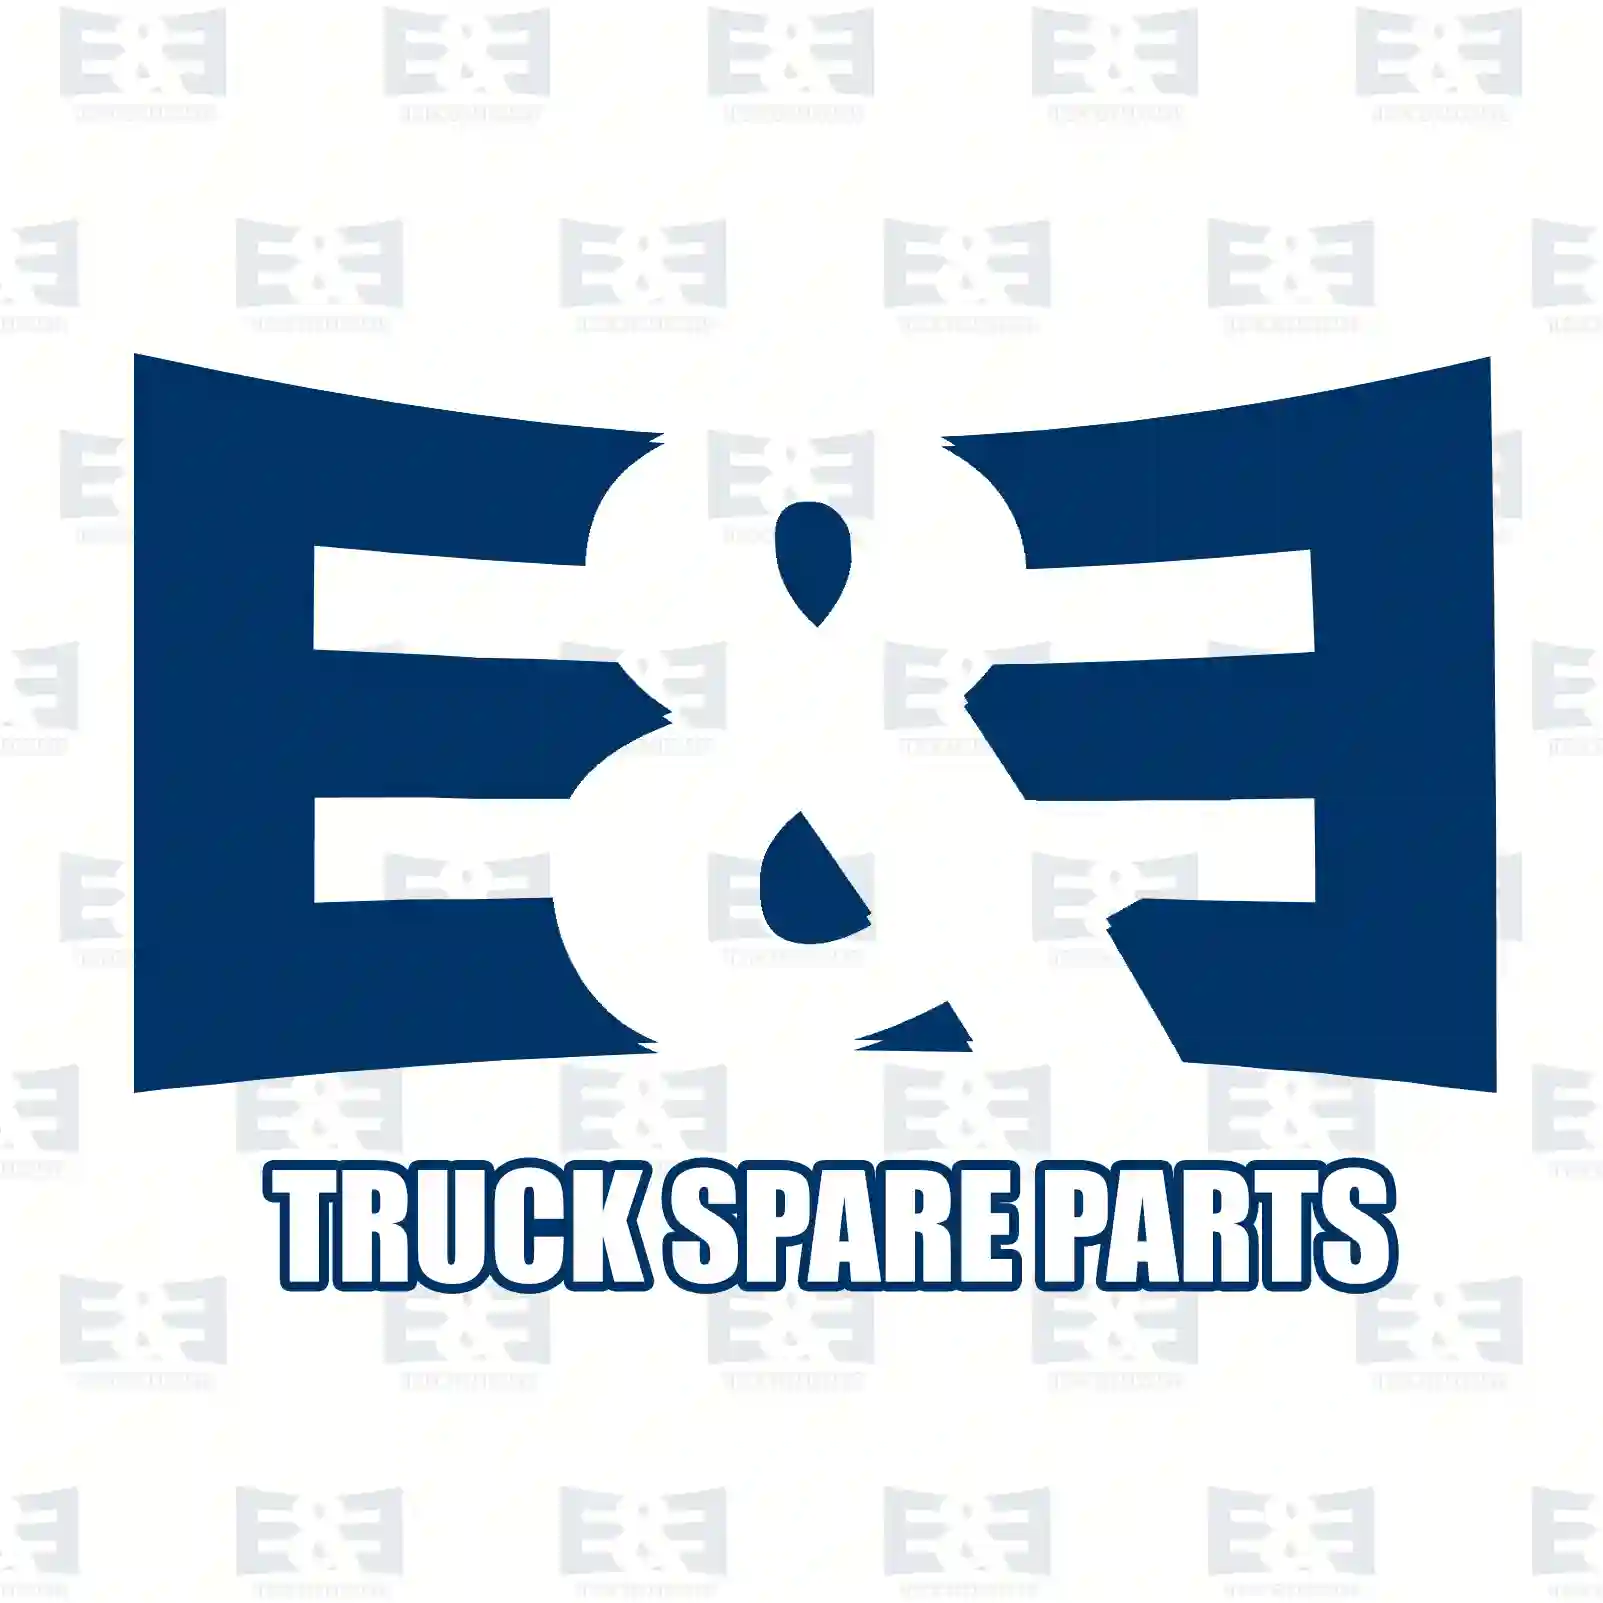 Cabin shock absorber, rear, 2E2276456, 85417226025 ||  2E2276456 E&E Truck Spare Parts | Truck Spare Parts, Auotomotive Spare Parts Cabin shock absorber, rear, 2E2276456, 85417226025 ||  2E2276456 E&E Truck Spare Parts | Truck Spare Parts, Auotomotive Spare Parts